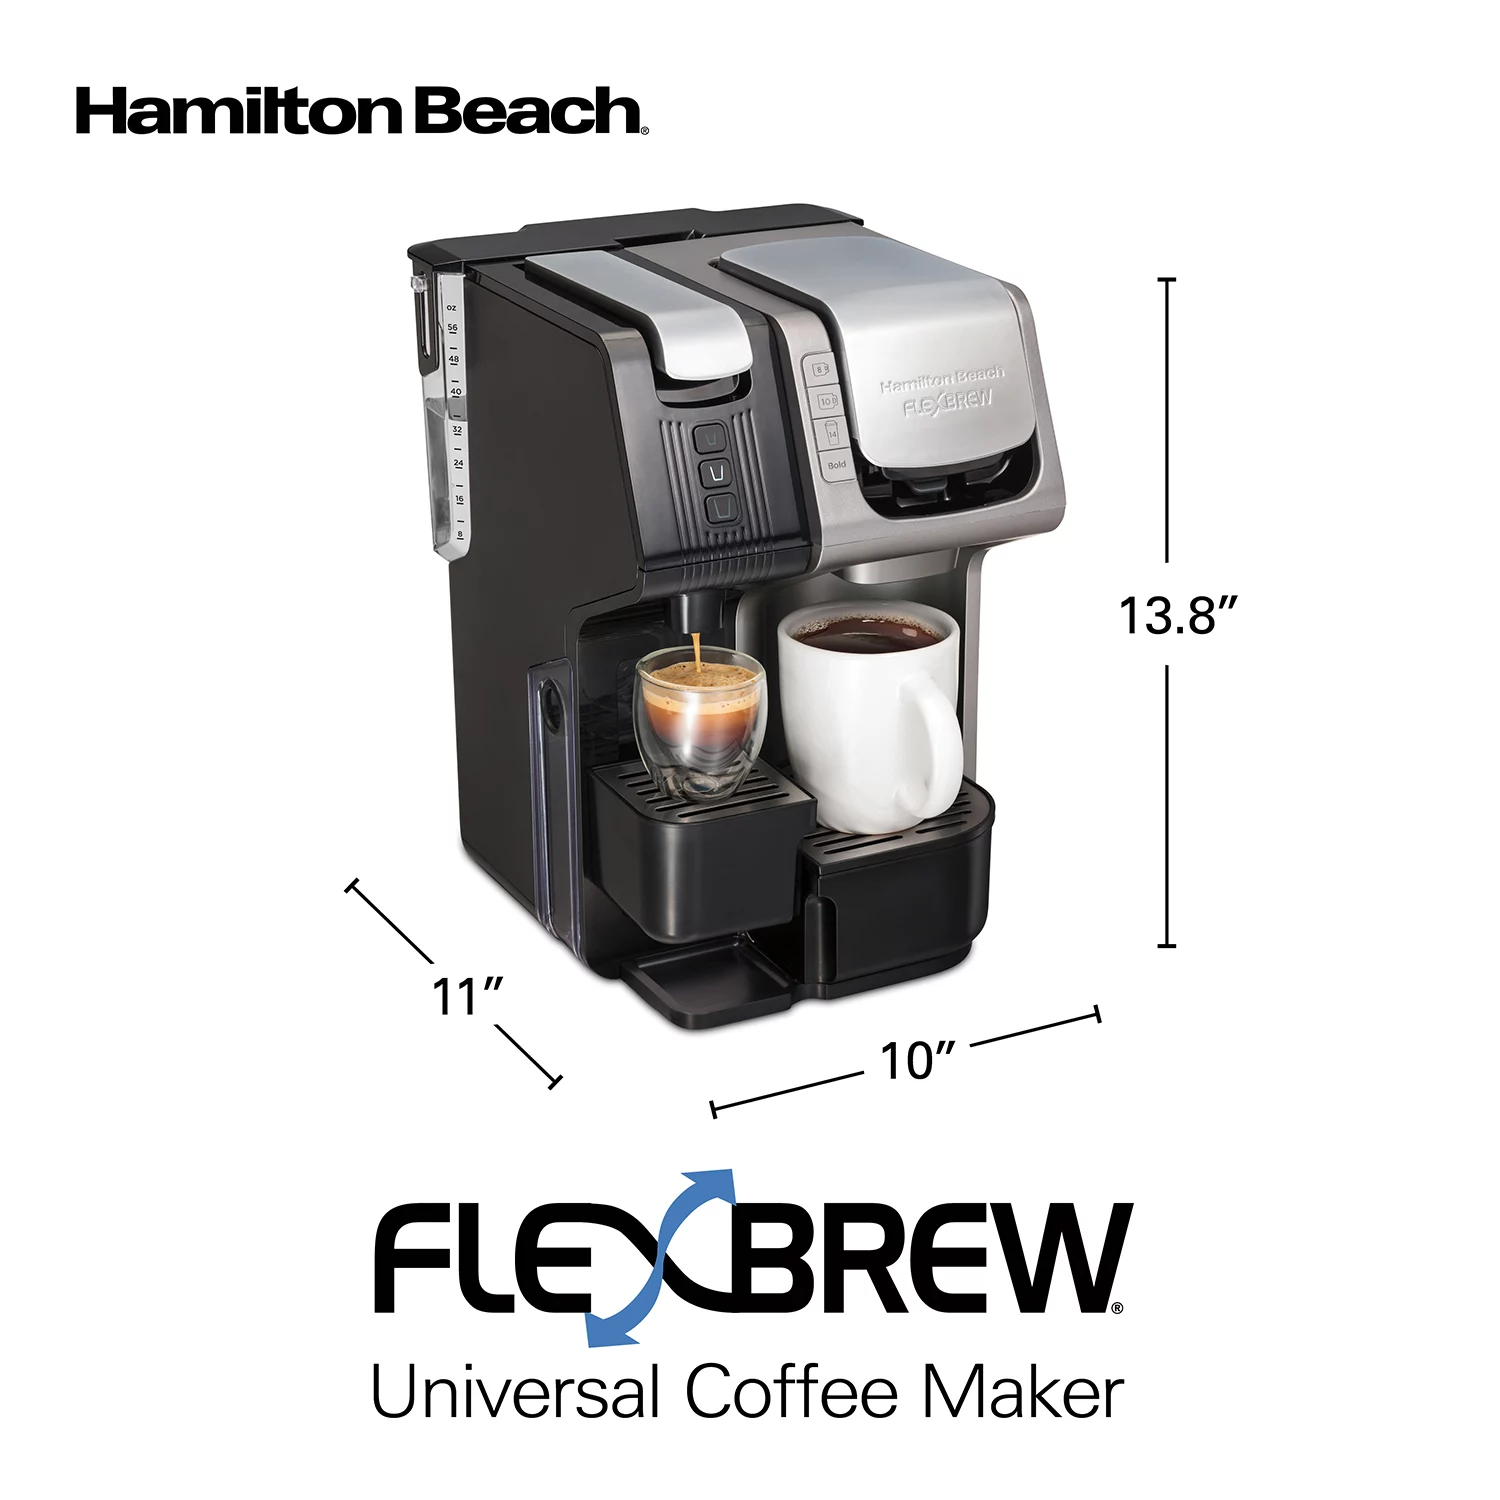 Hamilton Beach Flexbrew Trio Coffee Maker, Coffee, Tea & Espresso, Furniture & Appliances